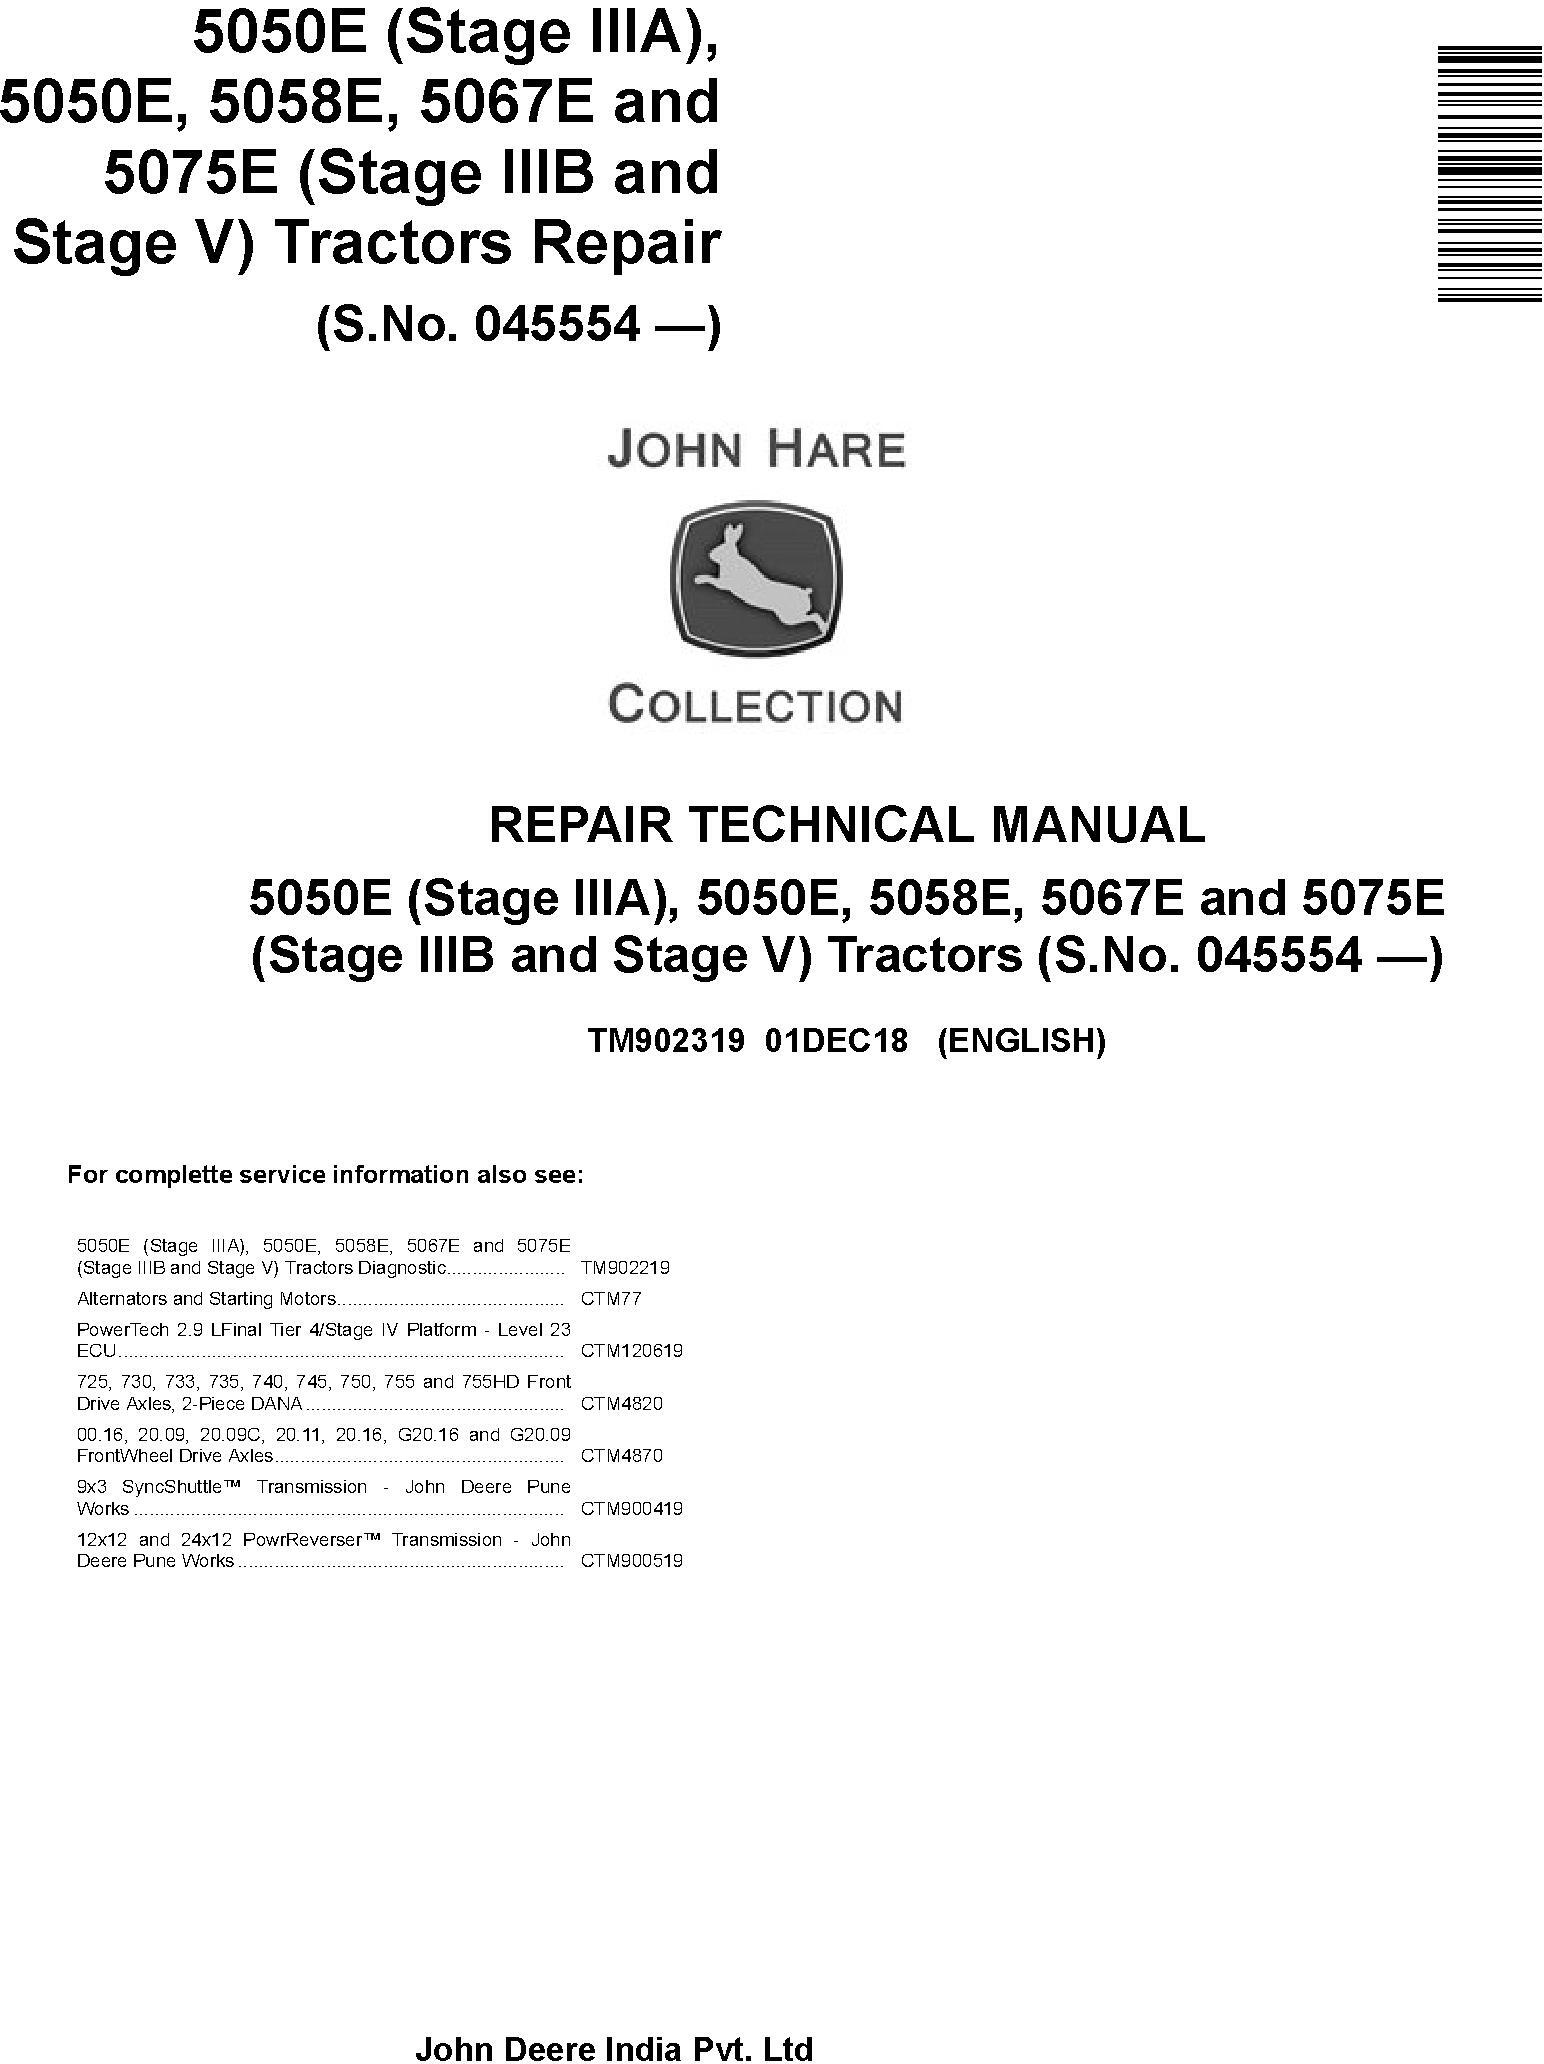 John Deere 5050E, 5050E, 5058E, 5067E, 5075E Tractors Service Repair Technical Manual (TM902319) - 19124